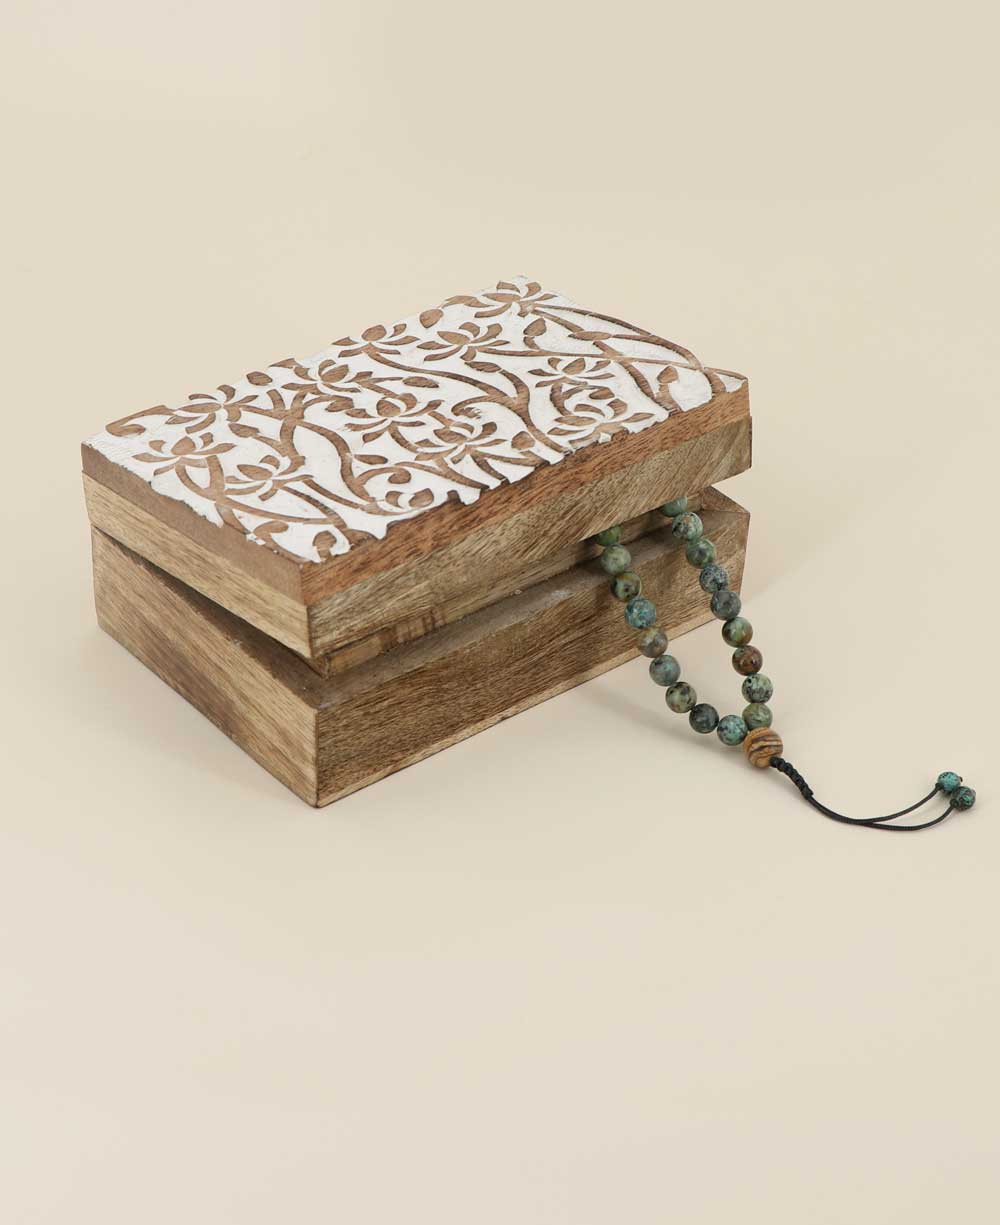 Fairtrade Carved Lotus Mala or Keepsake Wood Box - Gift Boxes & Tins